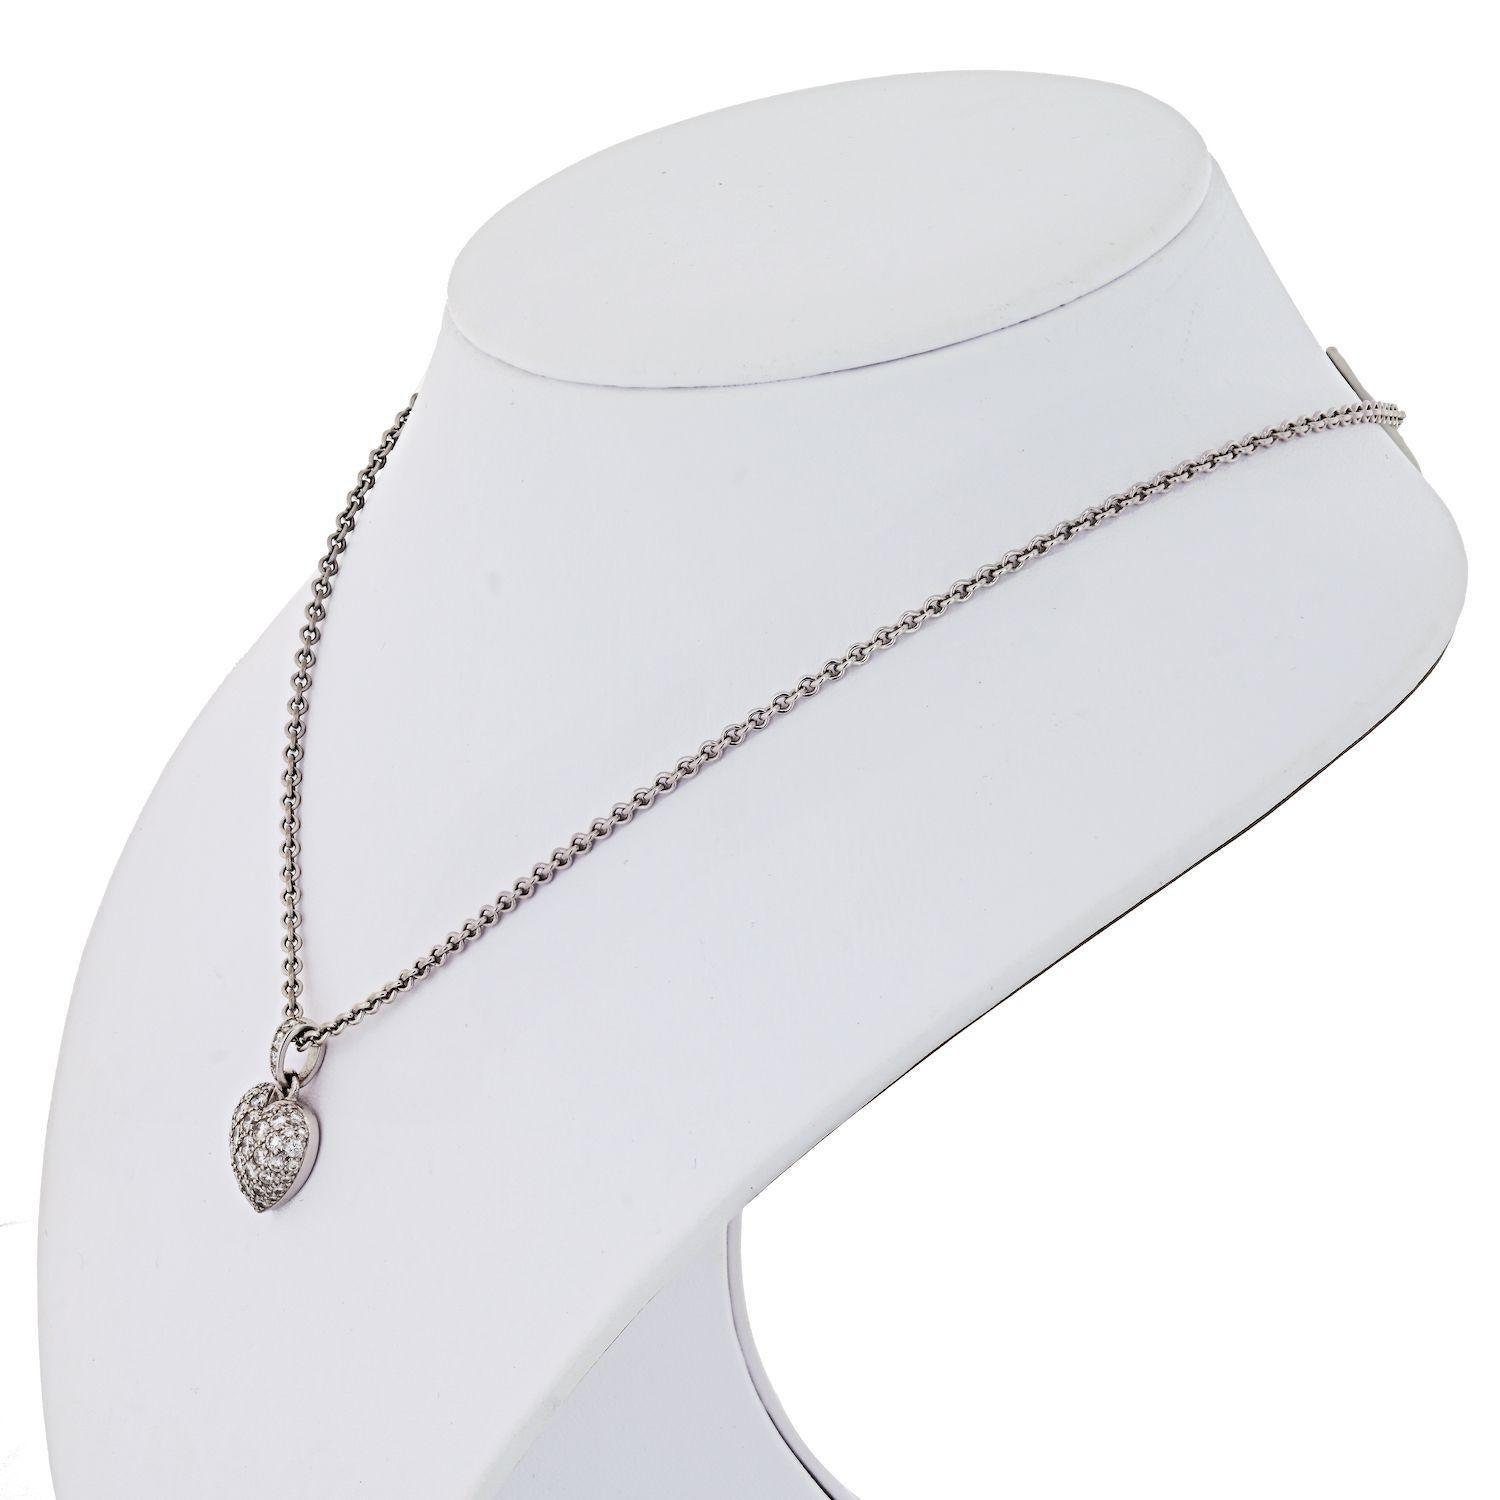 Brilliant Cut Cartier 18 Karat White Gold Pave Diamond Heart on a Chain Pendant